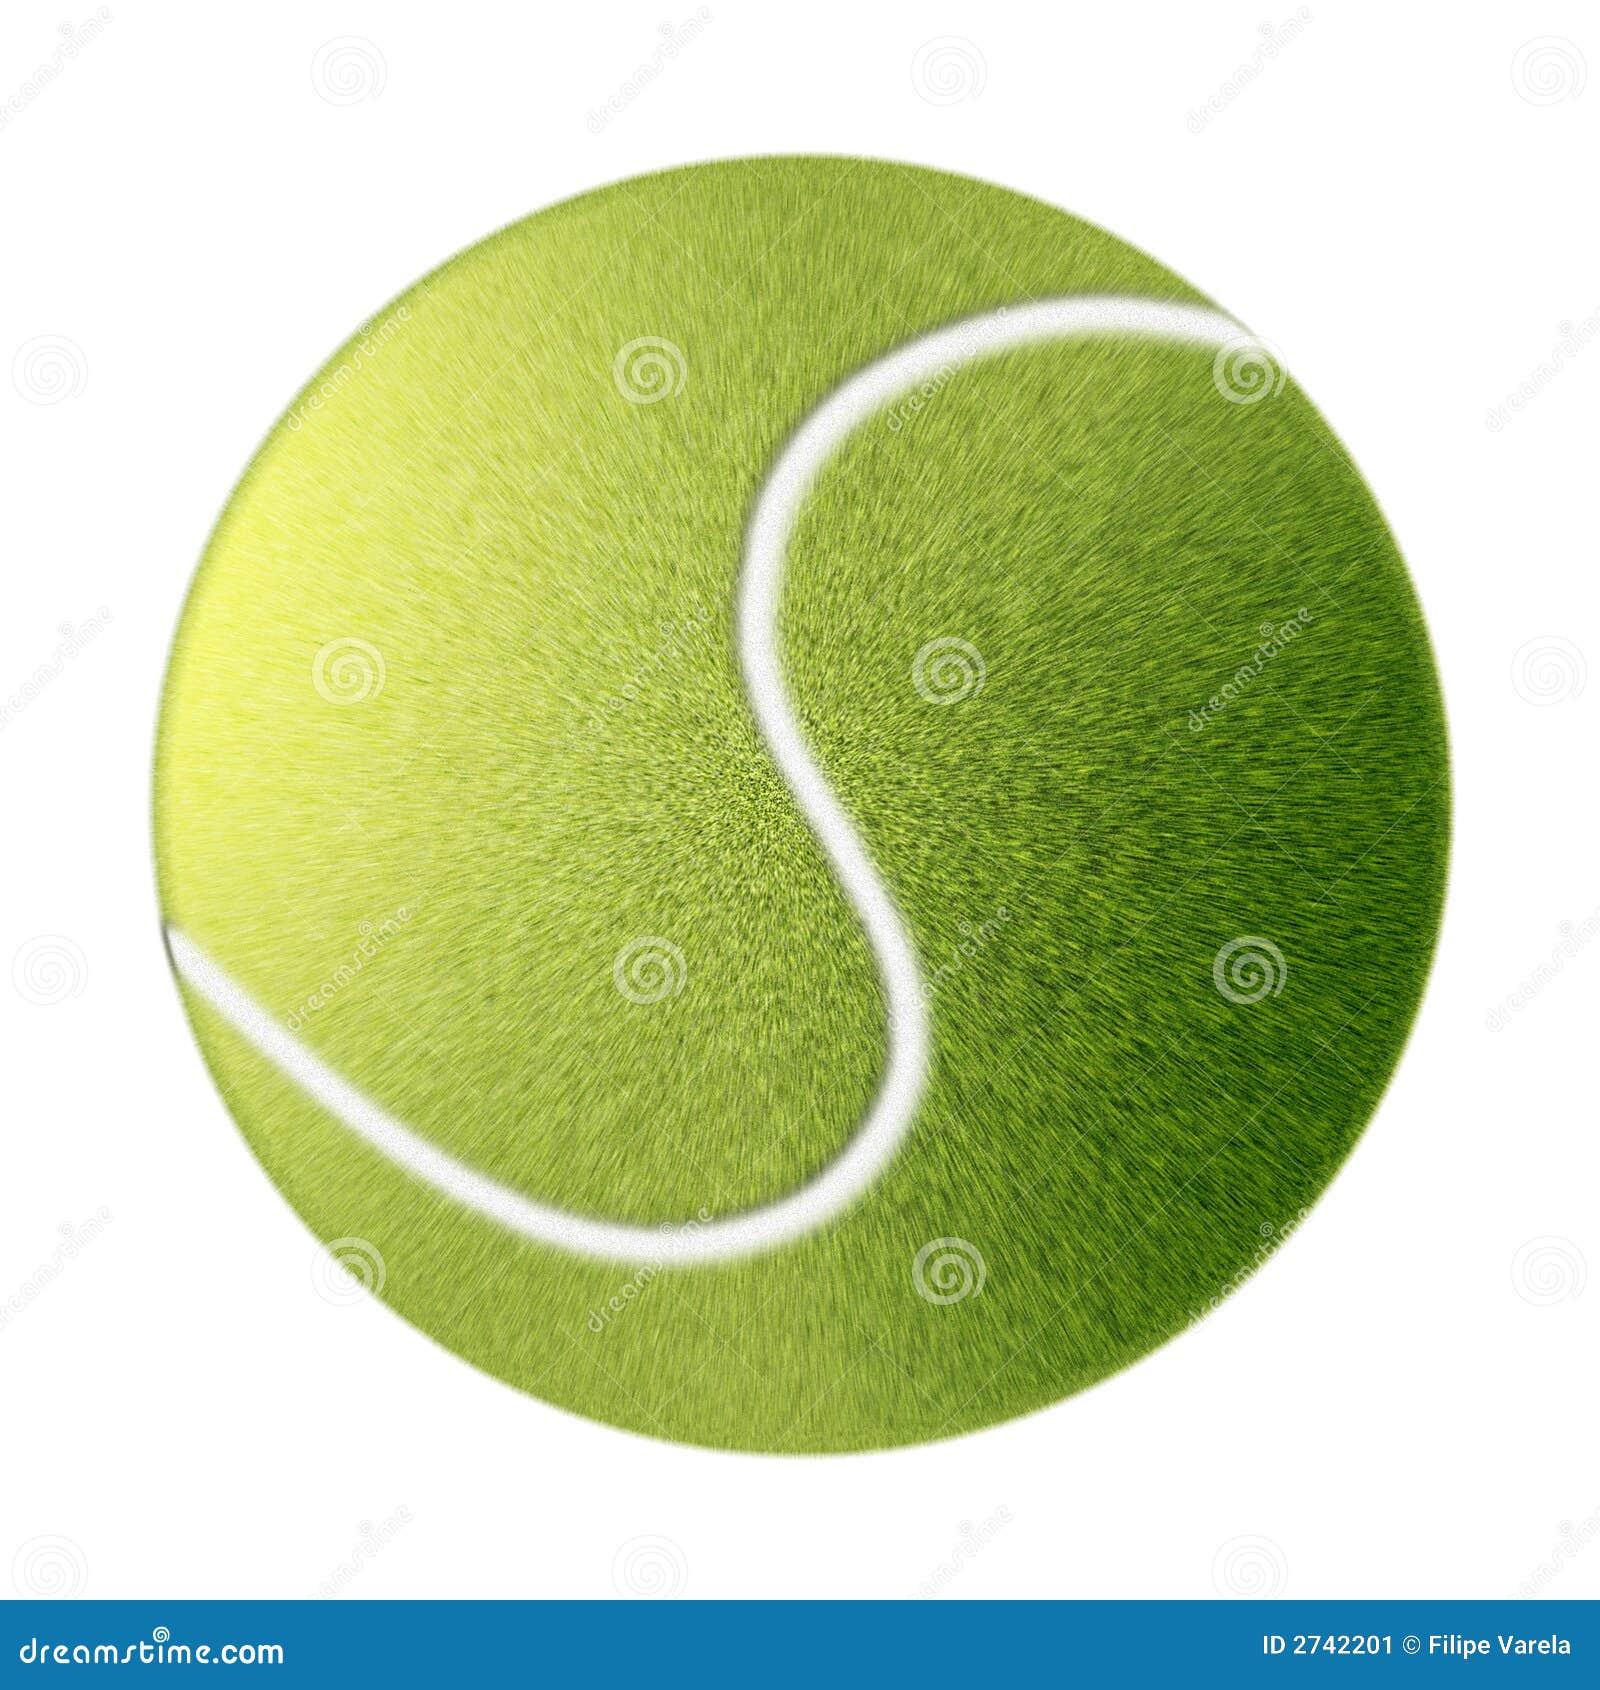 Drawn tennis ball isolated stock illustration. Illustration of bright